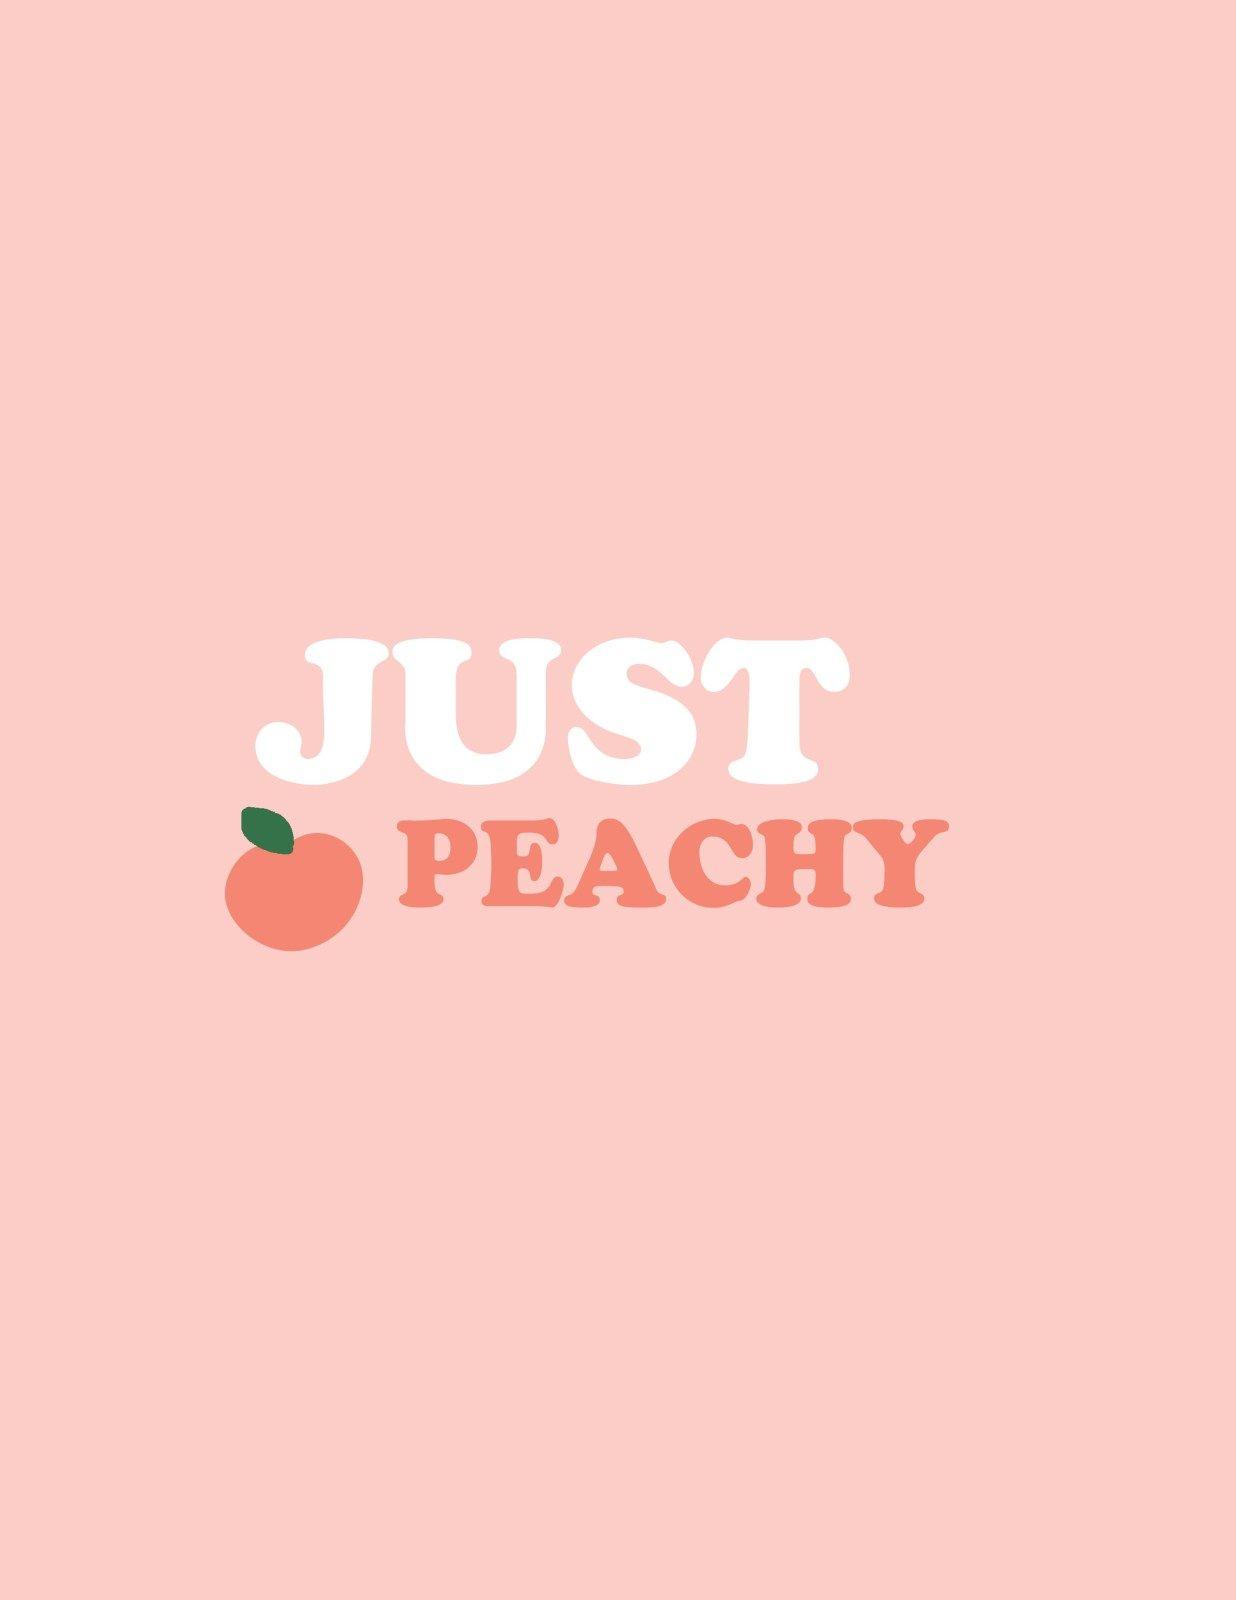 Peach Aesthetic Images  Free Download on Freepik